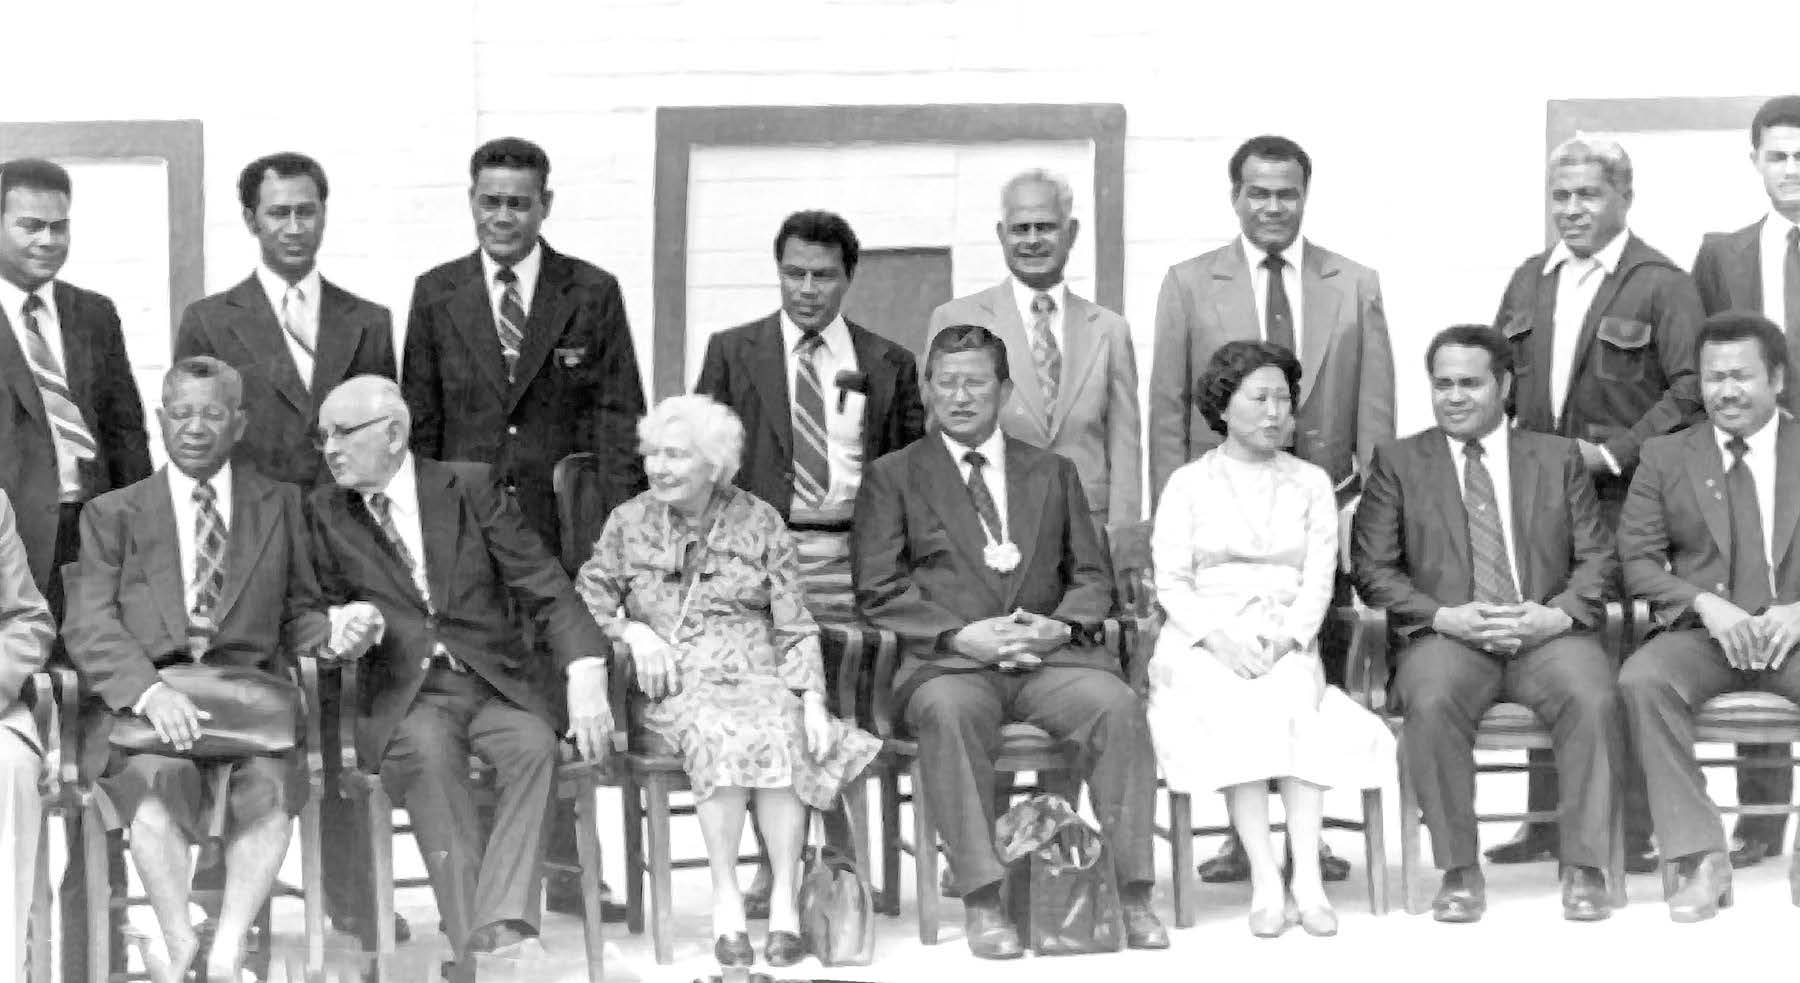 President Kimball and ecclesiastical leaders at groundbreaking. Courtesy of Kakolosi Kioa Tu‘ione.